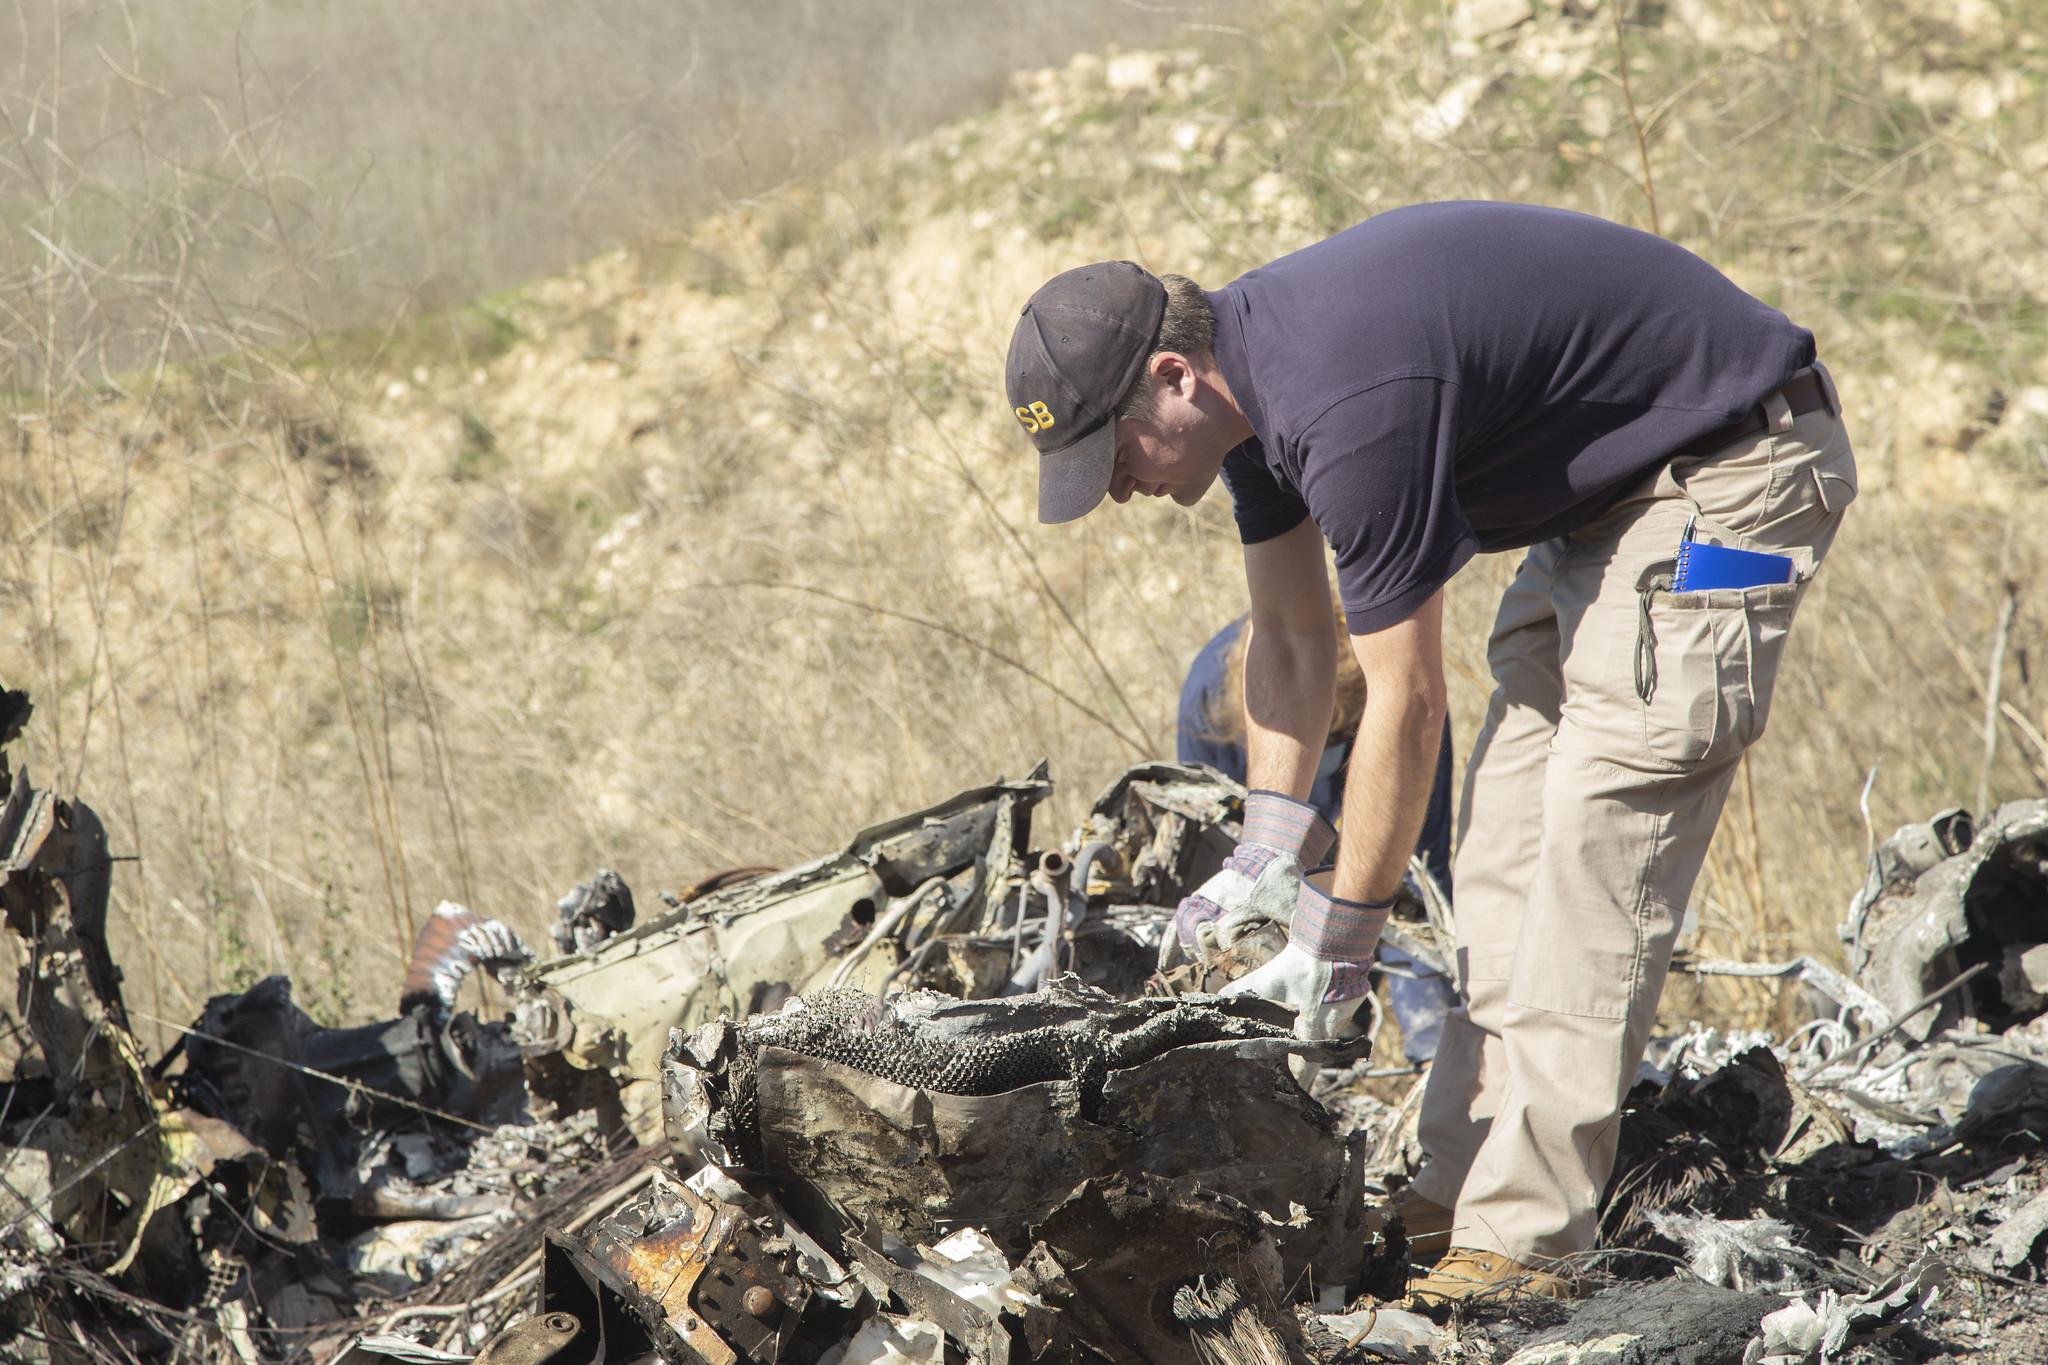 Kobe Bryant crash: NTSB reports says no evidence of catastrophic